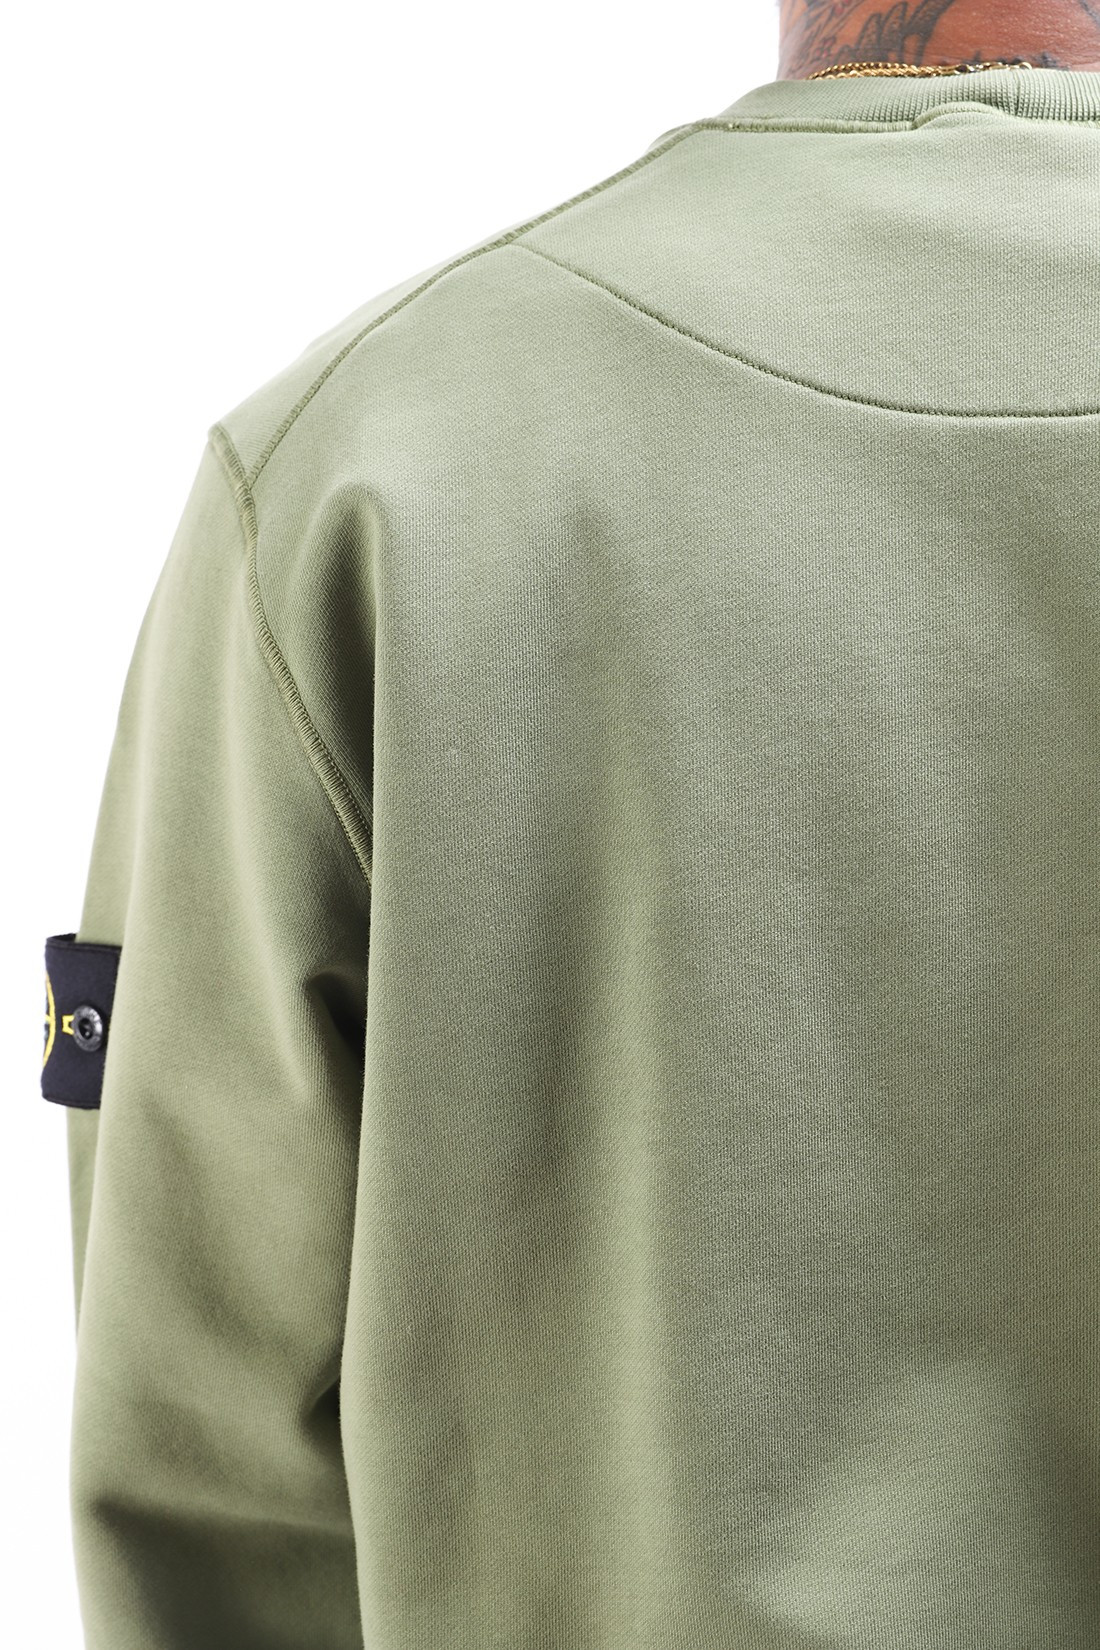 STONE ISLAND / 63051 crewneck sweater v0058 Verde oliva